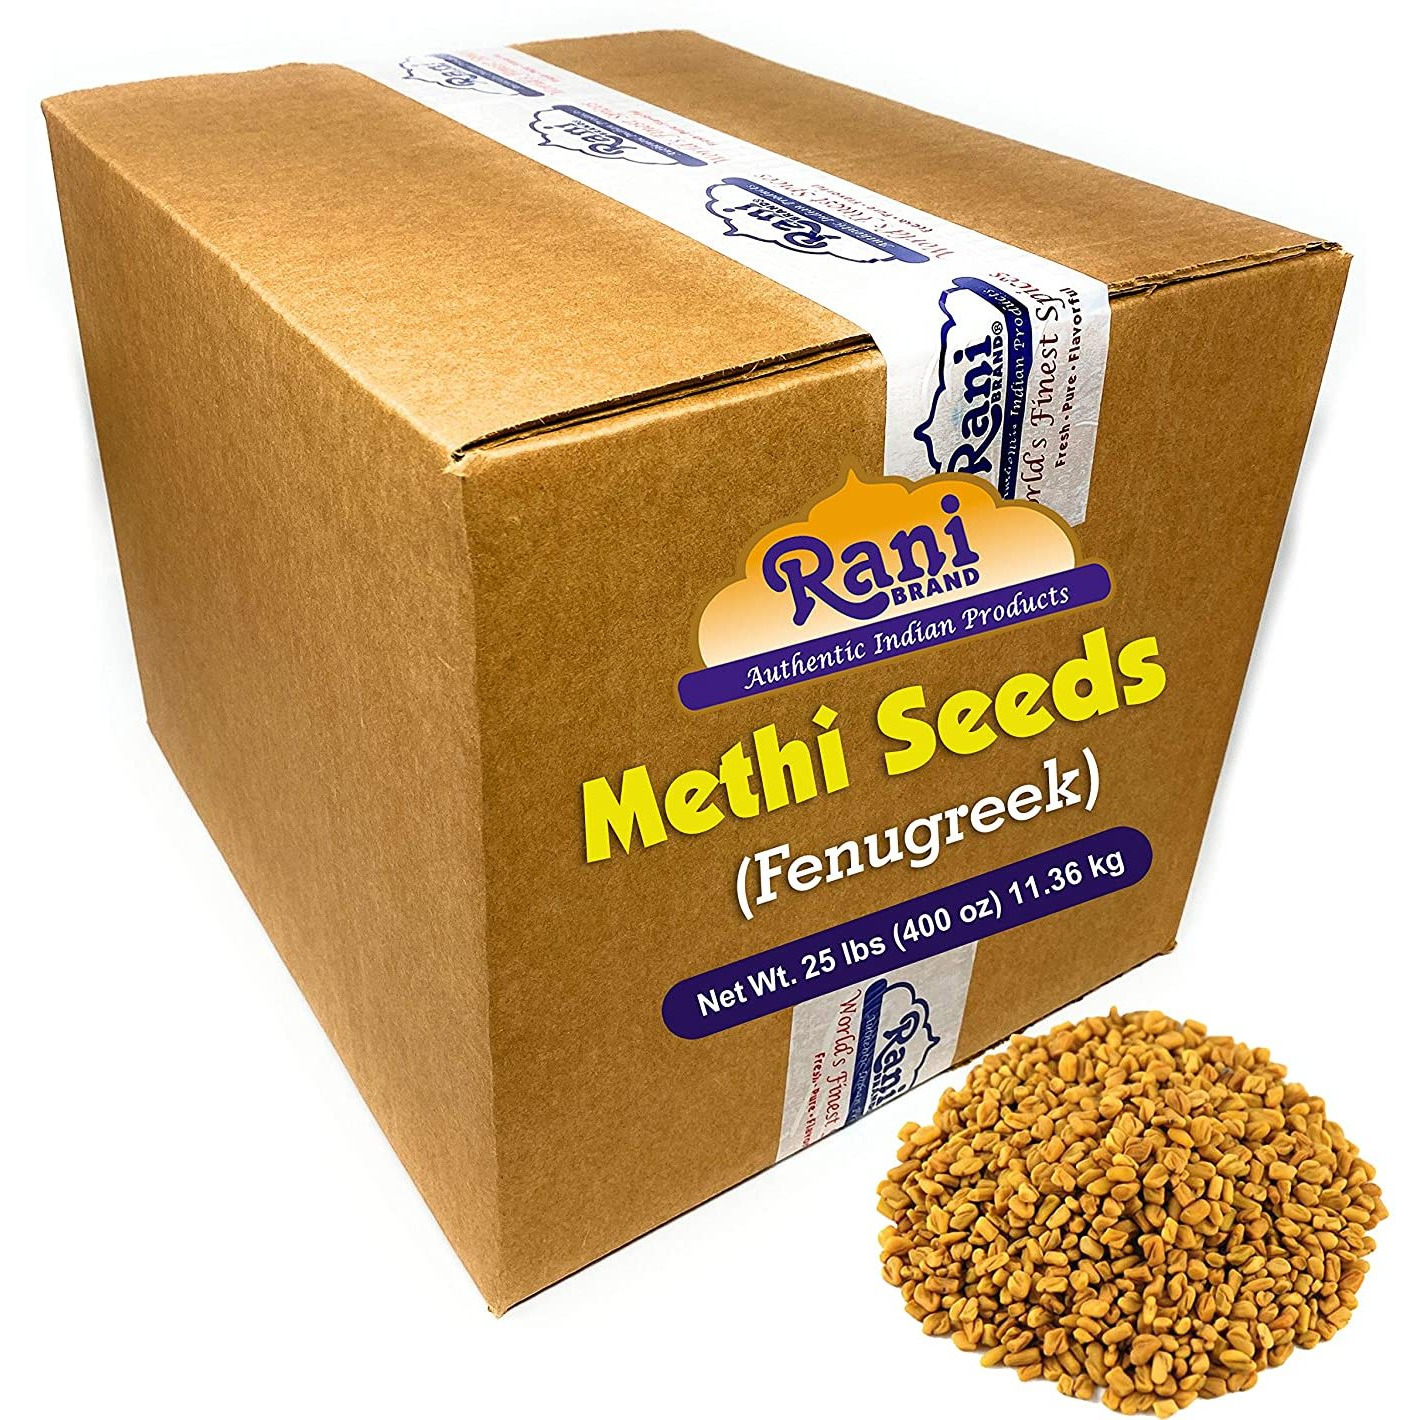 Rani Fenugreek (Methi) Seeds Whole, 25 Pound (400 Ounce) 11.36kg ~ Bulk Box ~ Trigonella foenum graecum~ All Natural | Vegan | Gluten Friendly | Non-GMO | Indian Origin, used in cooking & Ayurvedic spice